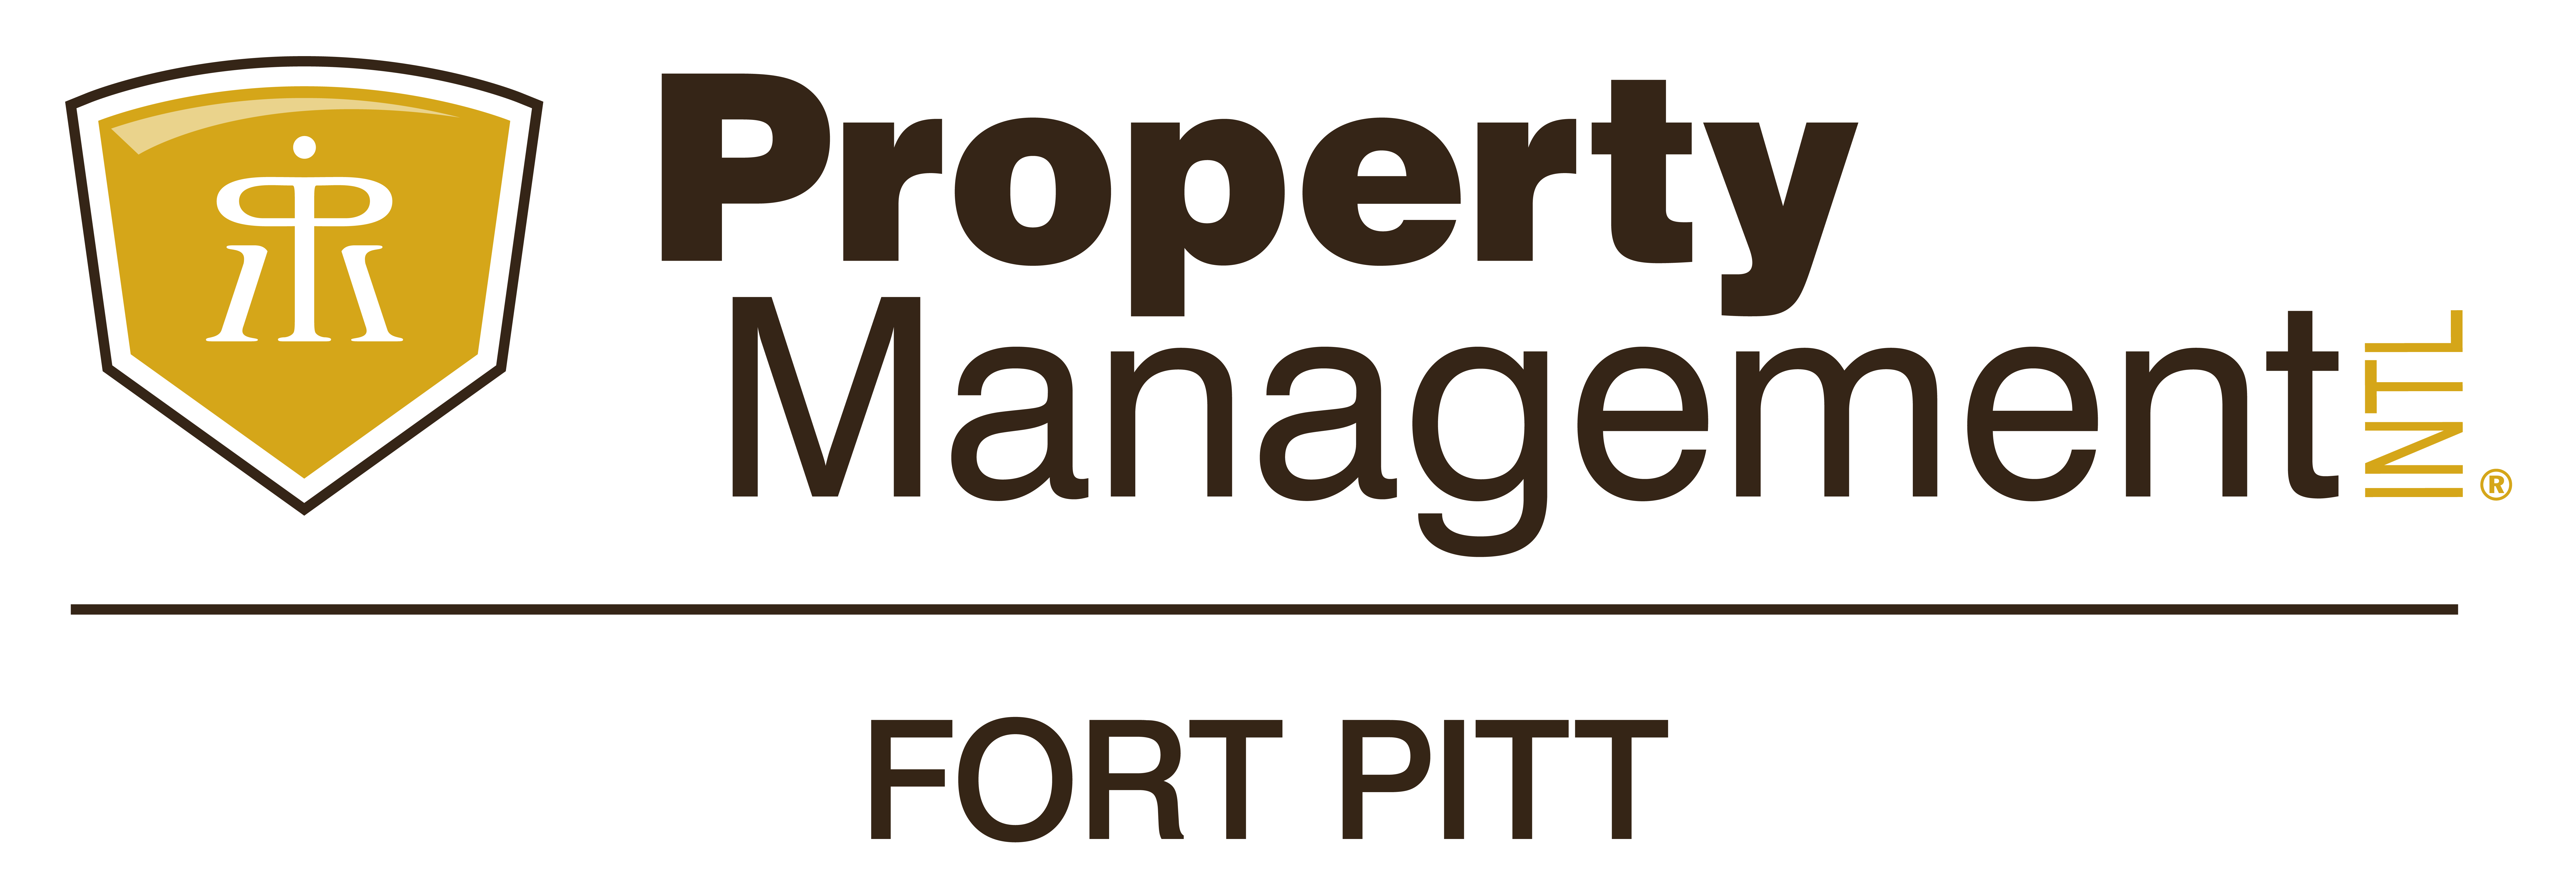 Fort Pitt Property Management